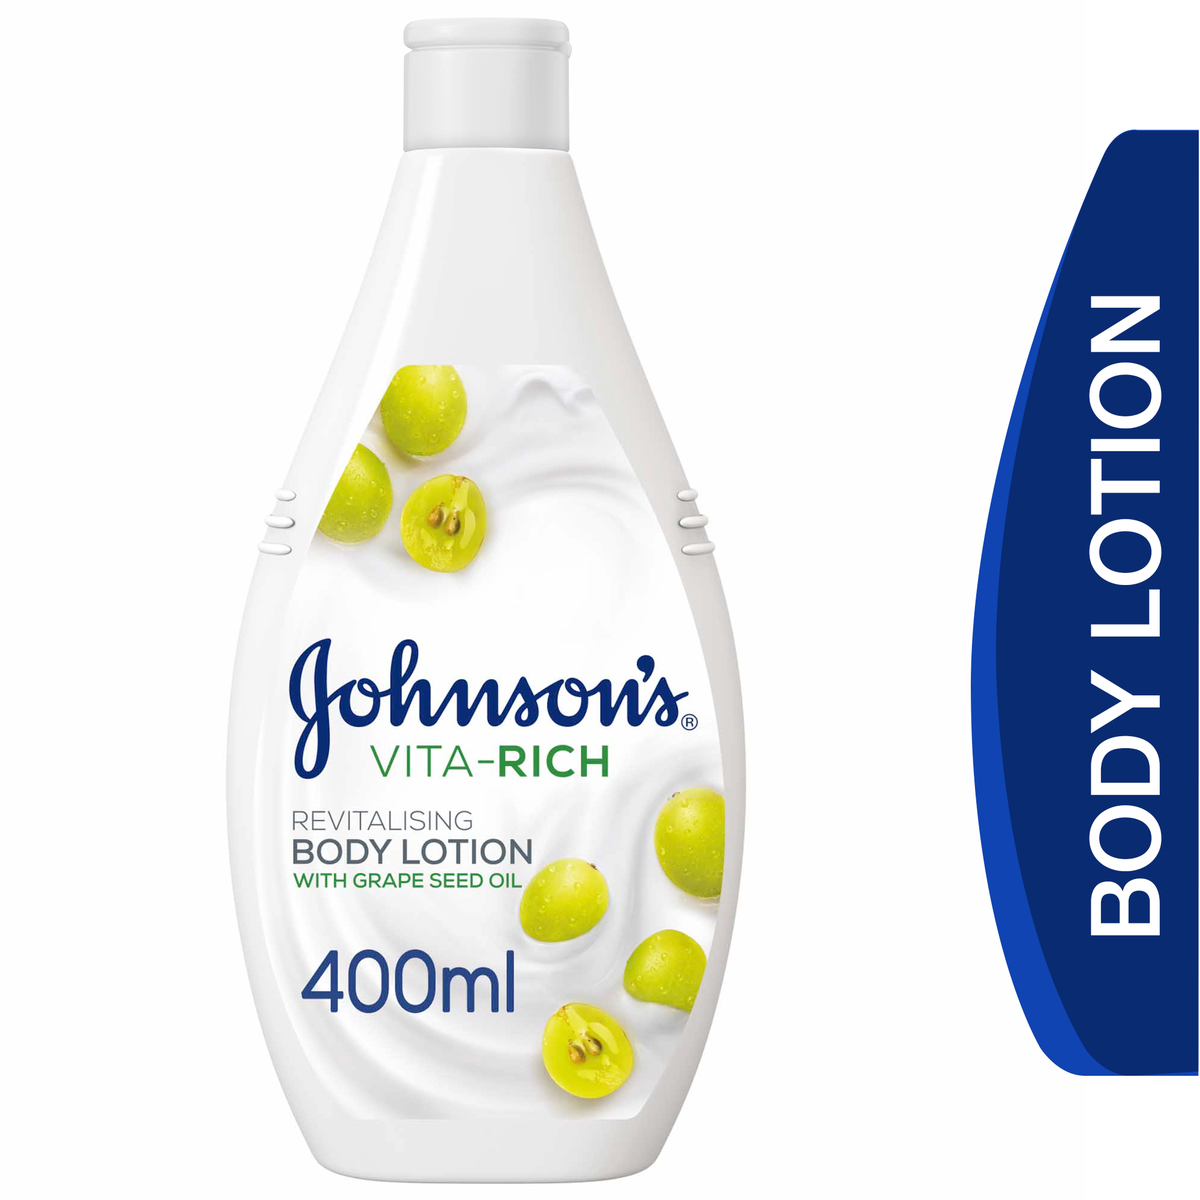 Johnson's Body Lotion Vita-Rich Revitalising 400ml